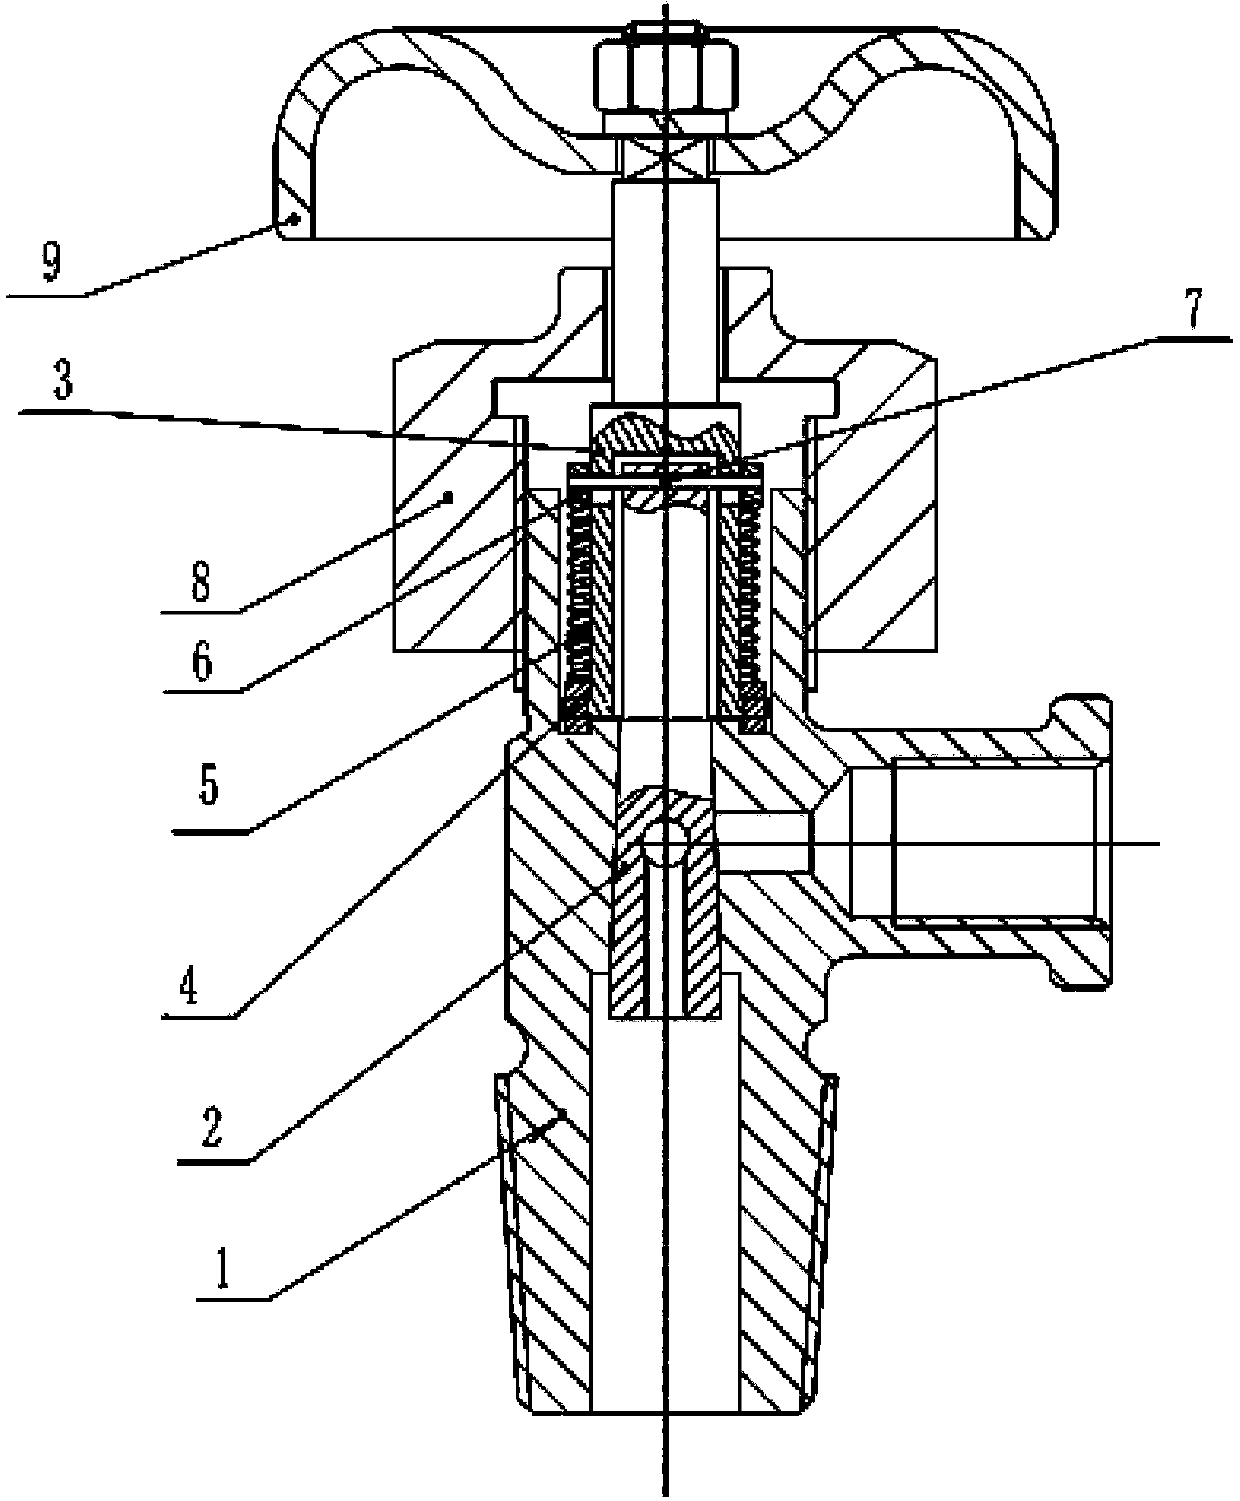 Pressure vessel valve